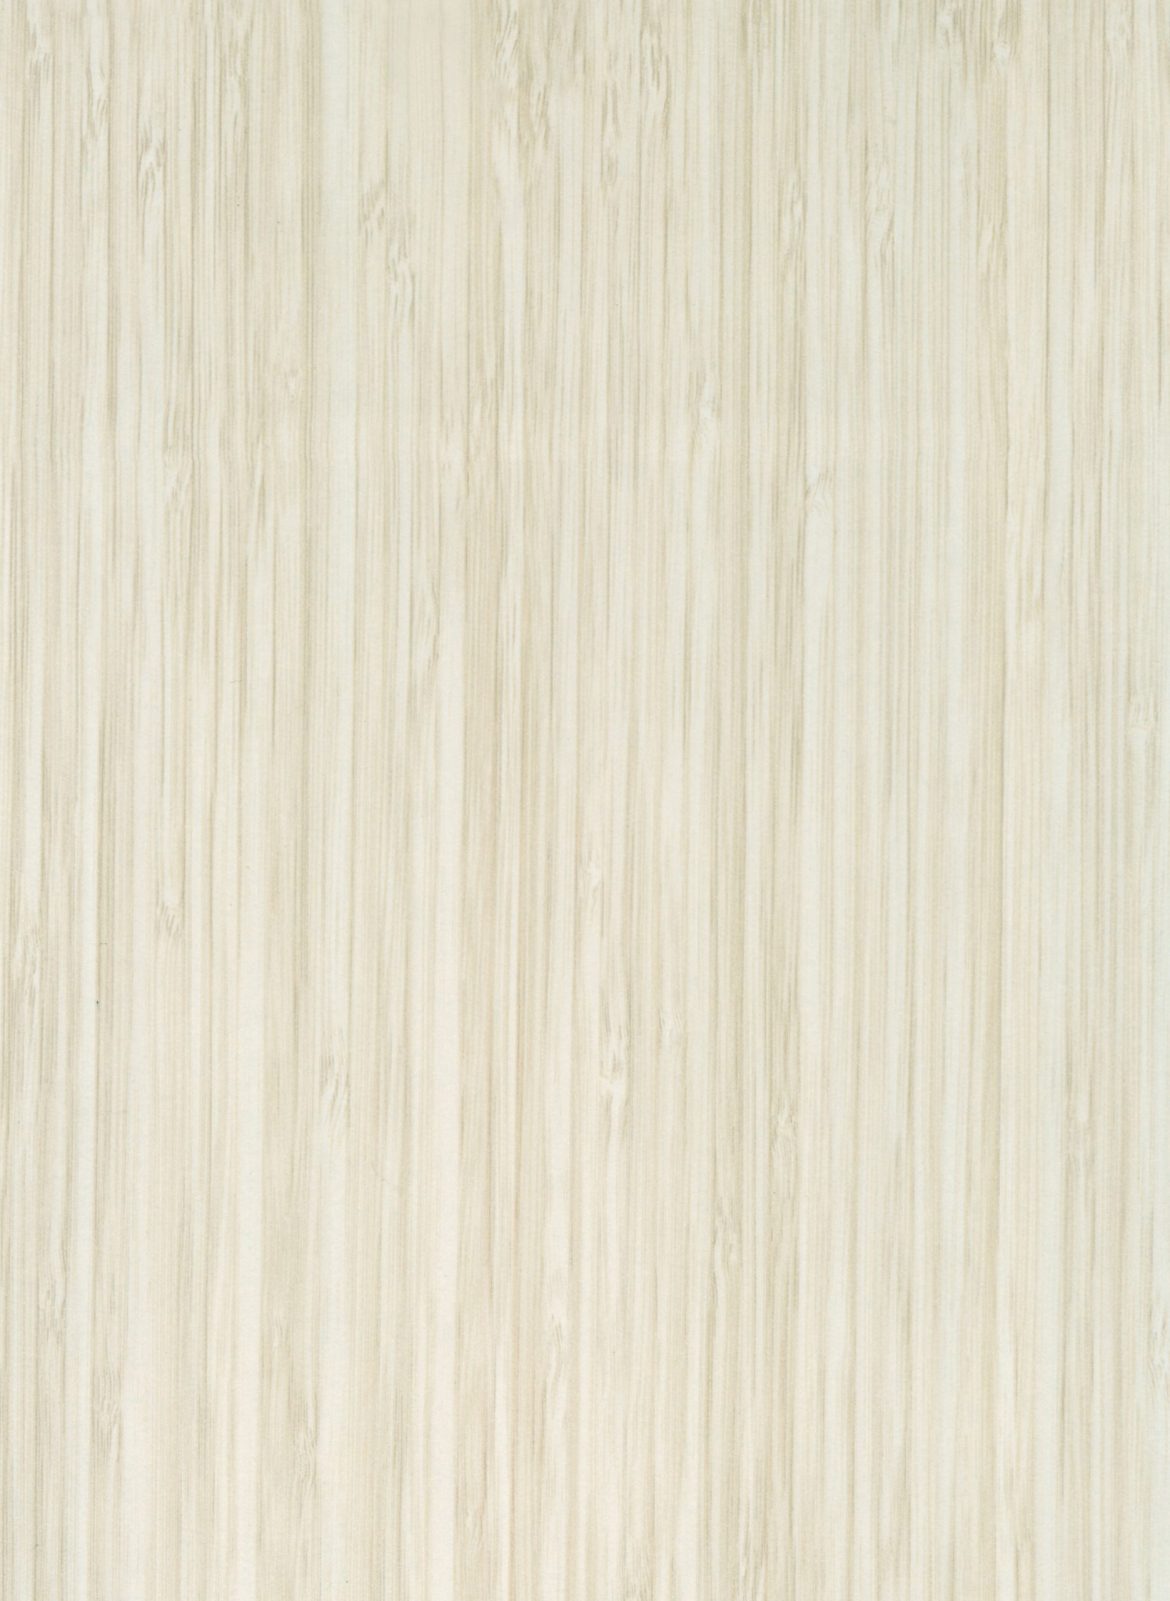 EWE 8329 S - R. Lite Bamboo Woodgrain High Pressure Laminate (hpl)